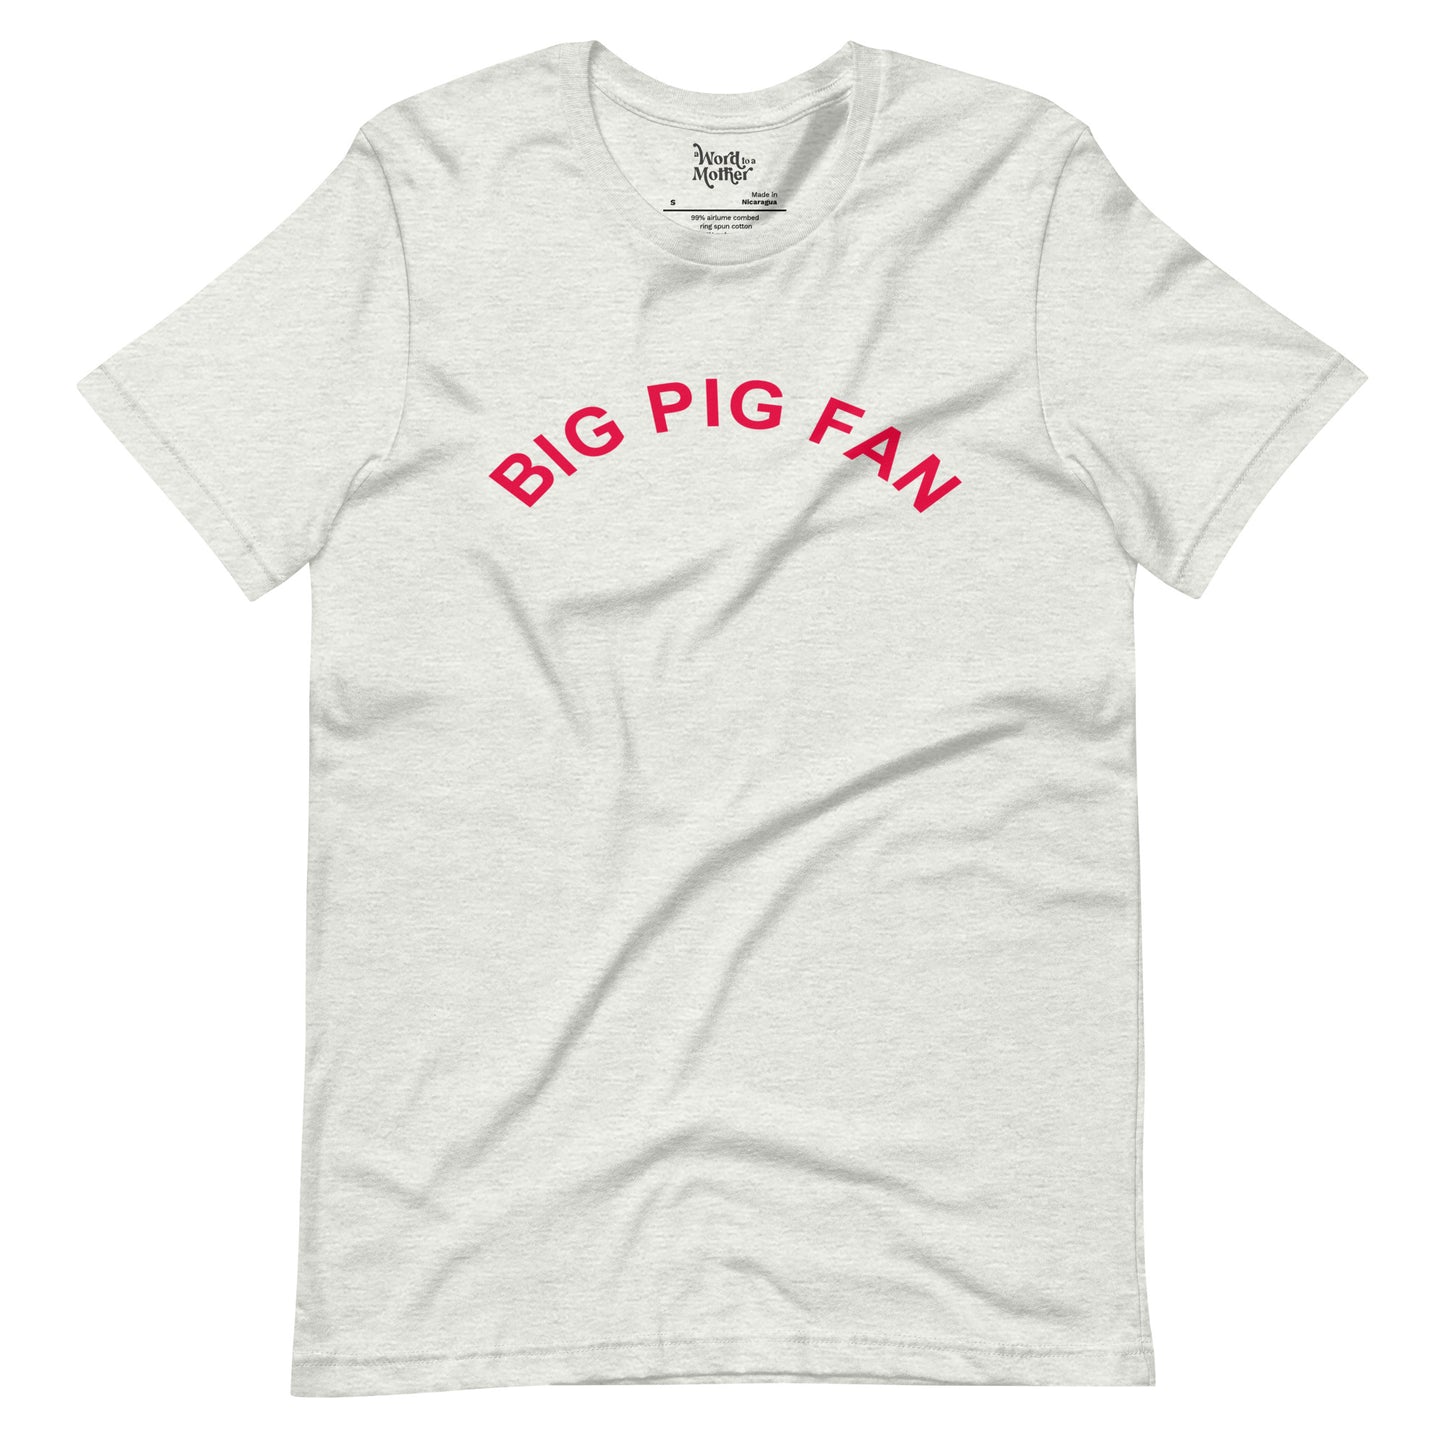 Big Pig Fan-Ash